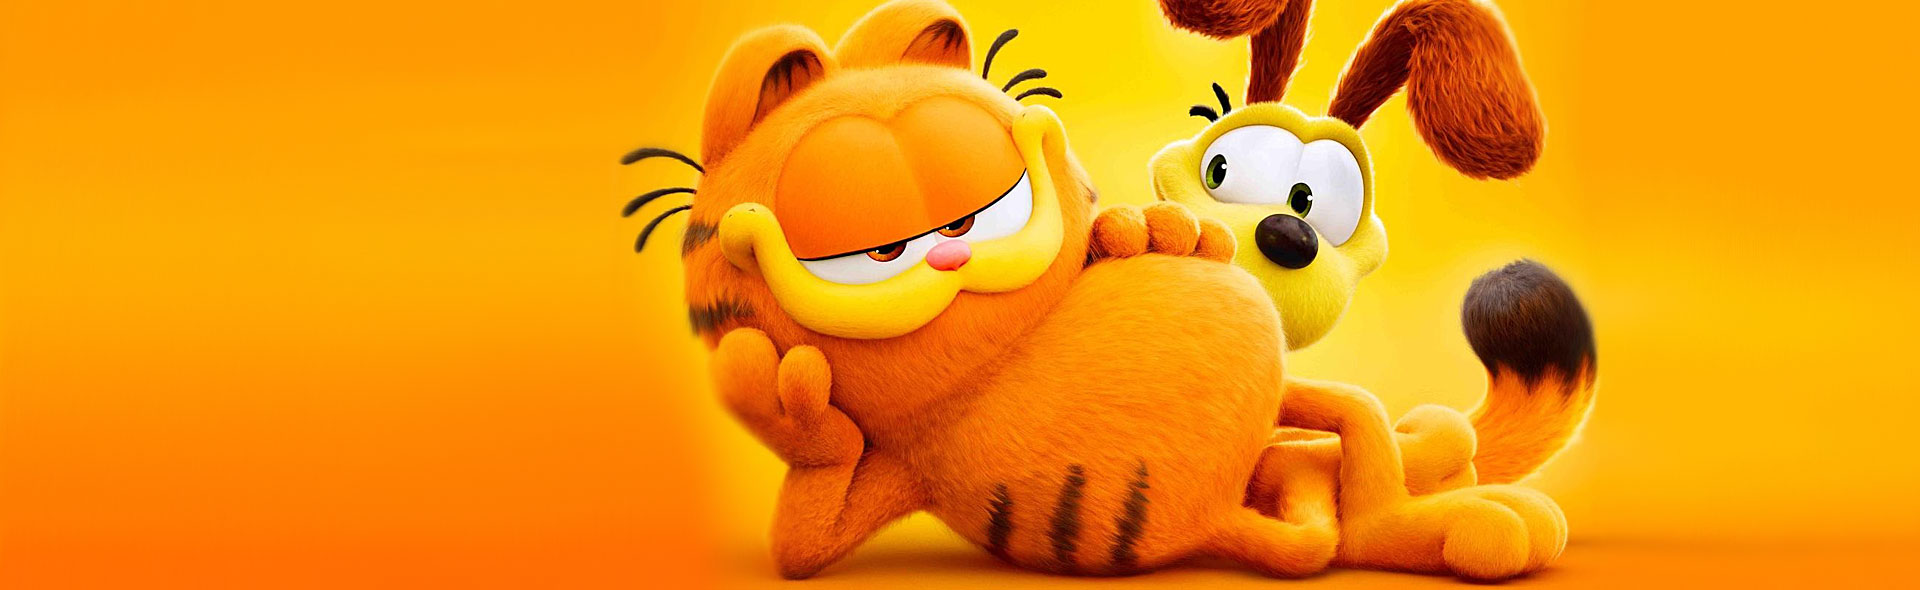 The Garfield Movie_slide_poster